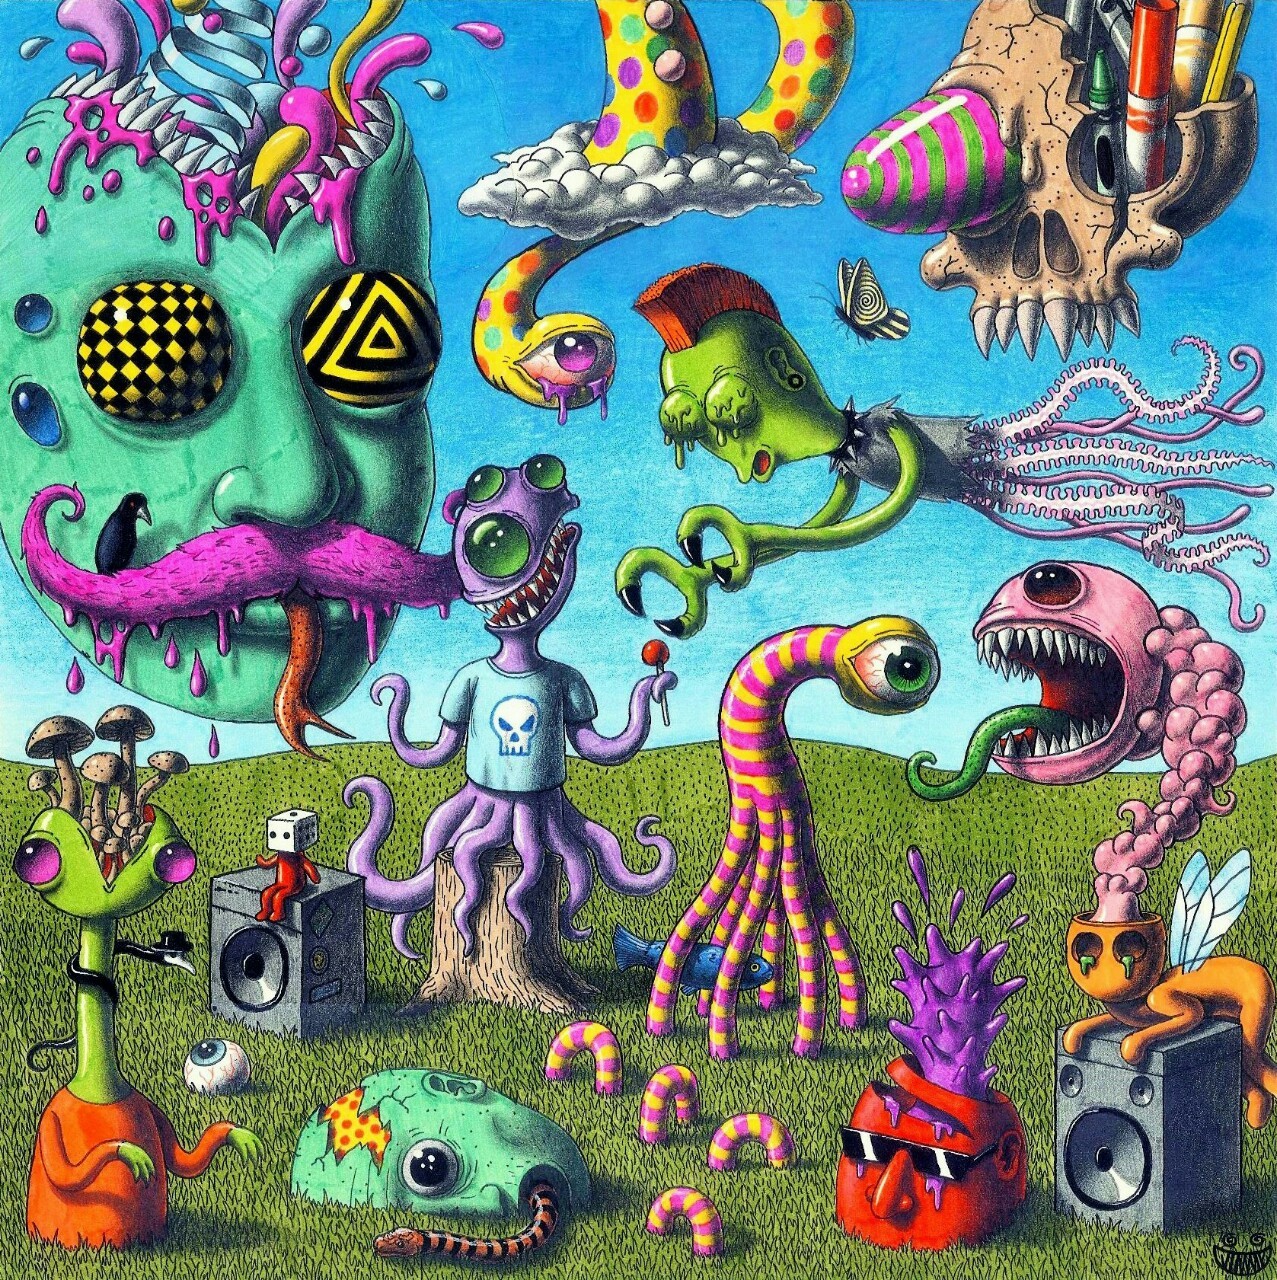 ArtStation - Trippy Creepy Album Cover